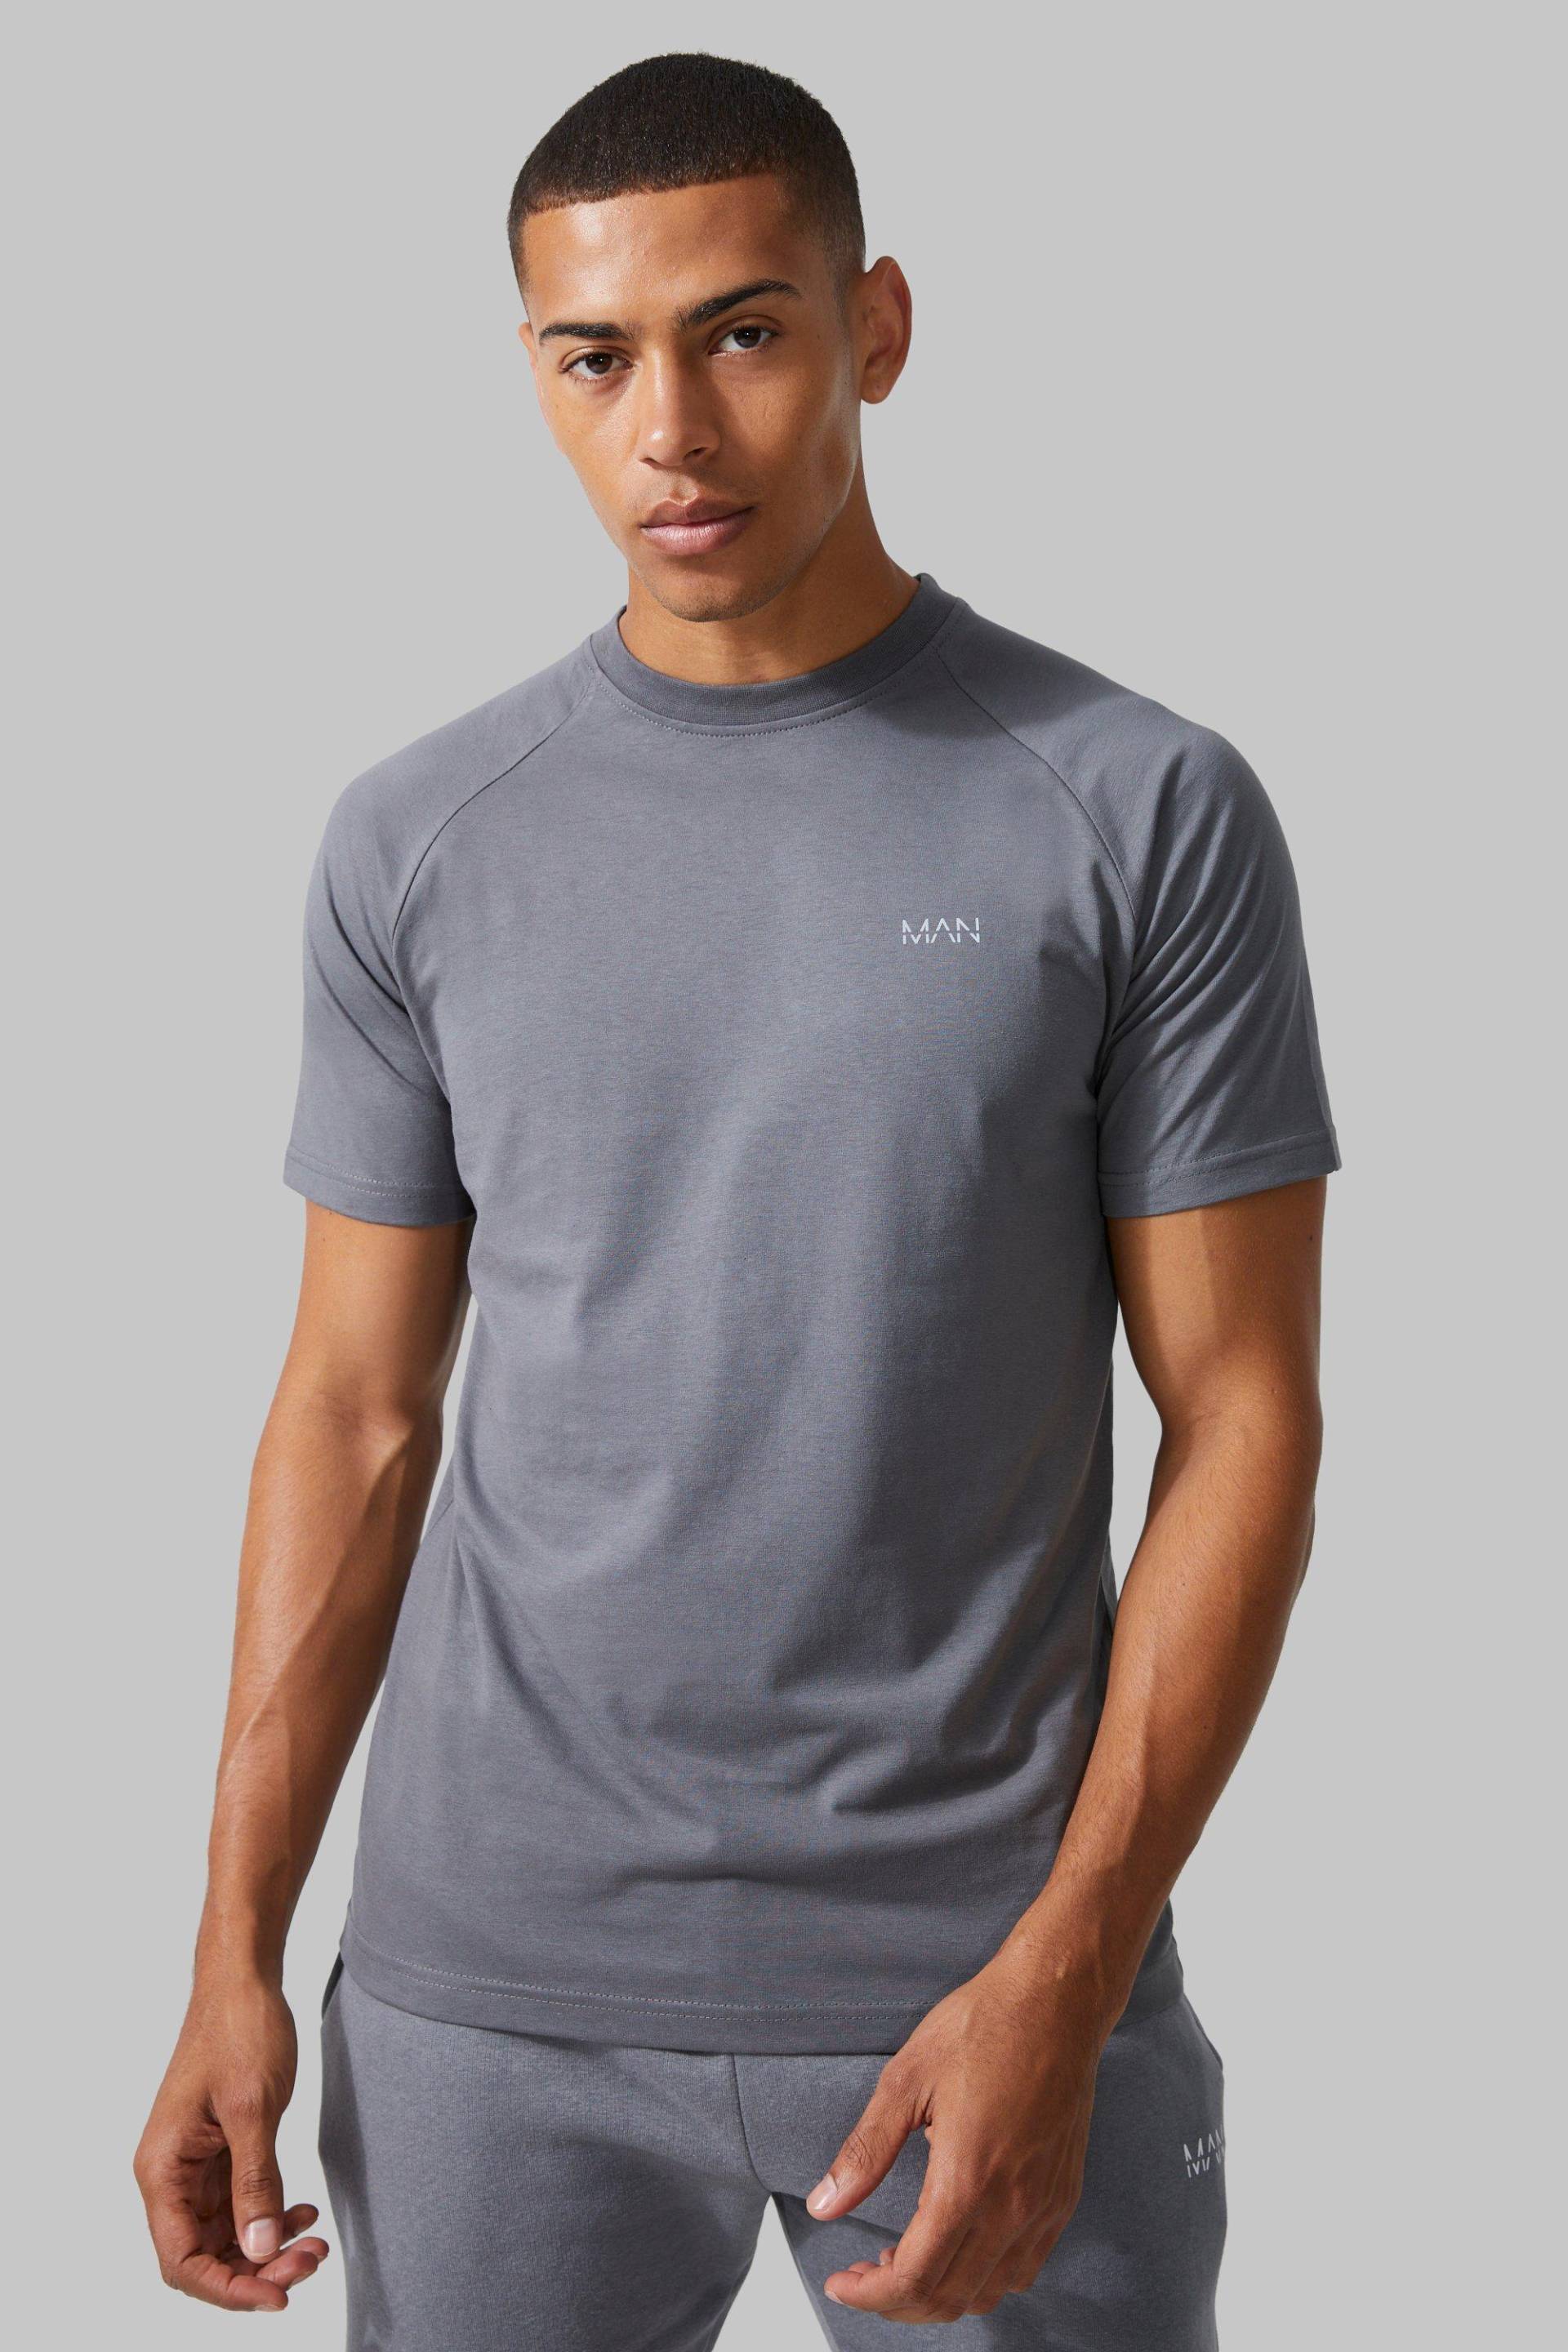 Mens Man Active Gym Raglan T-Shirt - Grau - L, Grau von boohooman